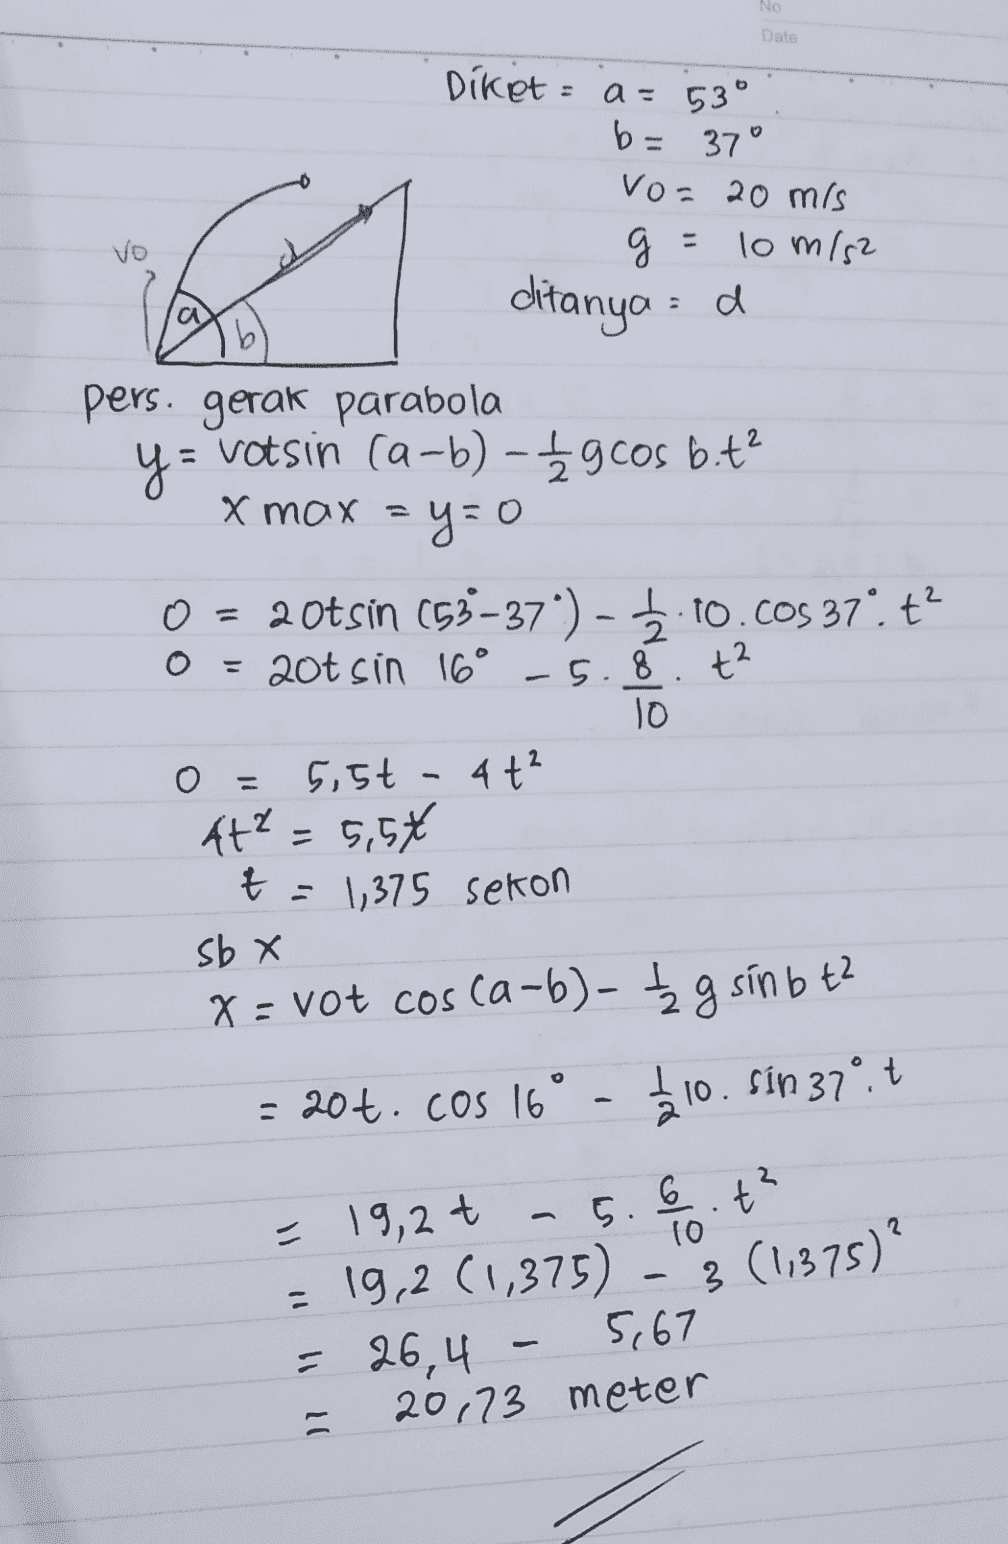 No Date a = b= Vo Diket 53° 37° vo= 20 mis 2 g g = 10 m/s2 ditanya :d pers. gerak parabola y= = Votsin ca-b) - £gcos bit? x = a b O - 0 = 20tsin (53–37) - 5.10.cos 37". ť? = 20t sin 16° -5.8. t² 10 5,5t - 4t? t² = 5,5€ t = 1,35 sekon sb X x = vot cos ca-b)- ţg sín b tz o - 20t. Cos 16 12.10. Sin 37°.t = 19,2t - 5.6.t? 10 = 19,2 (1,375) = 26,4 5,67 20,73 meter - 3 (11375)? - 